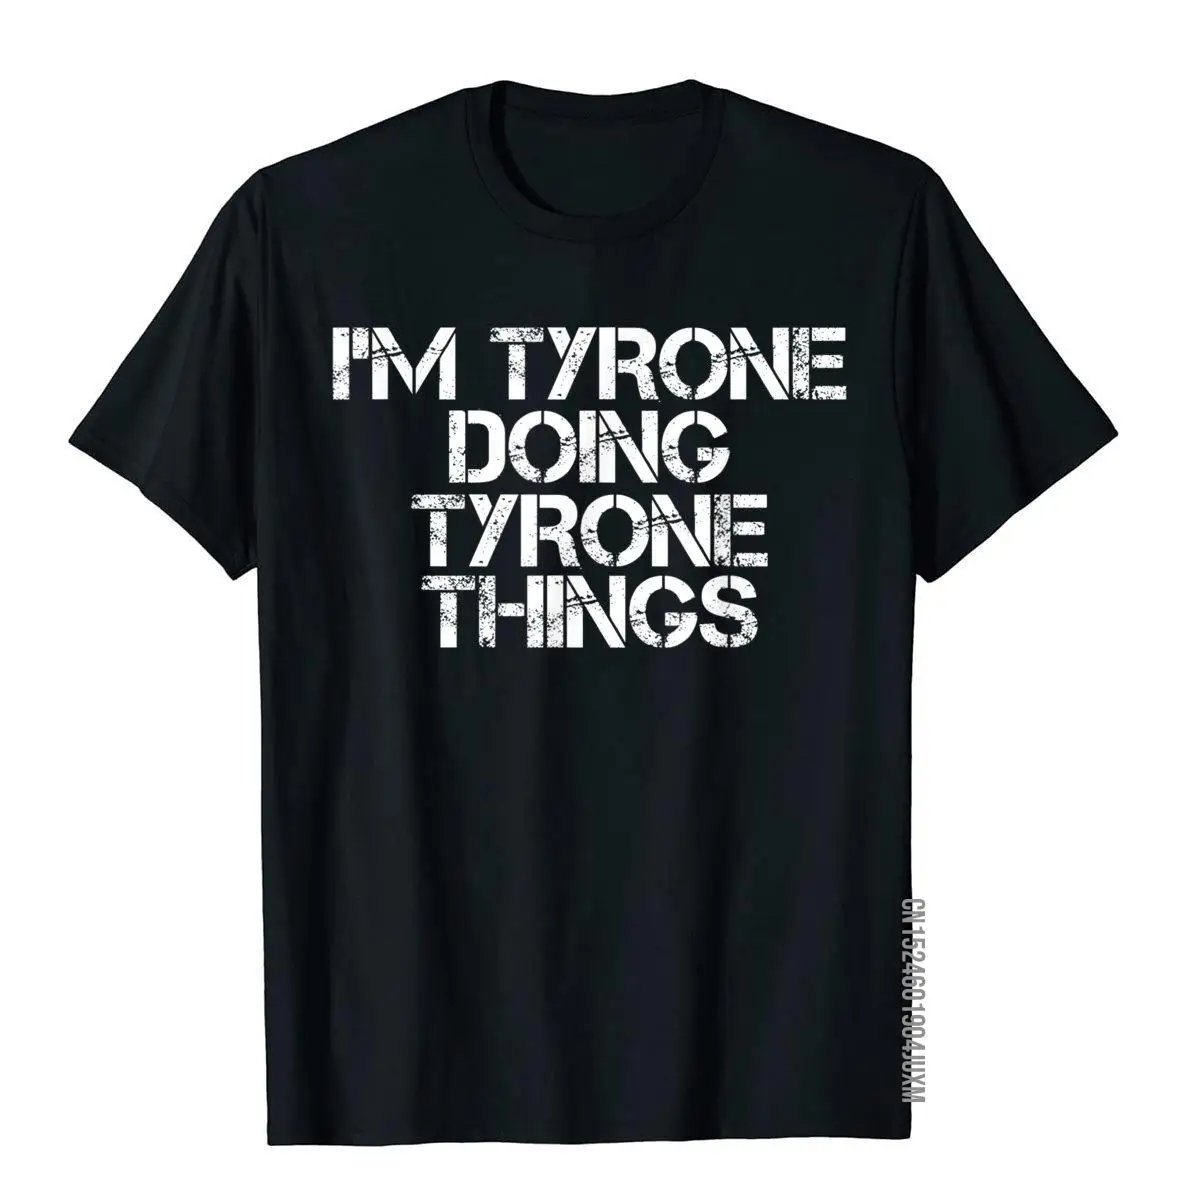 

I'm TYRONE DOING TYRONE THINGS Shirt Funny Gift Idea Faddish Printed On Top T-Shirts Cotton Adult Tops Shirt Hip Hop